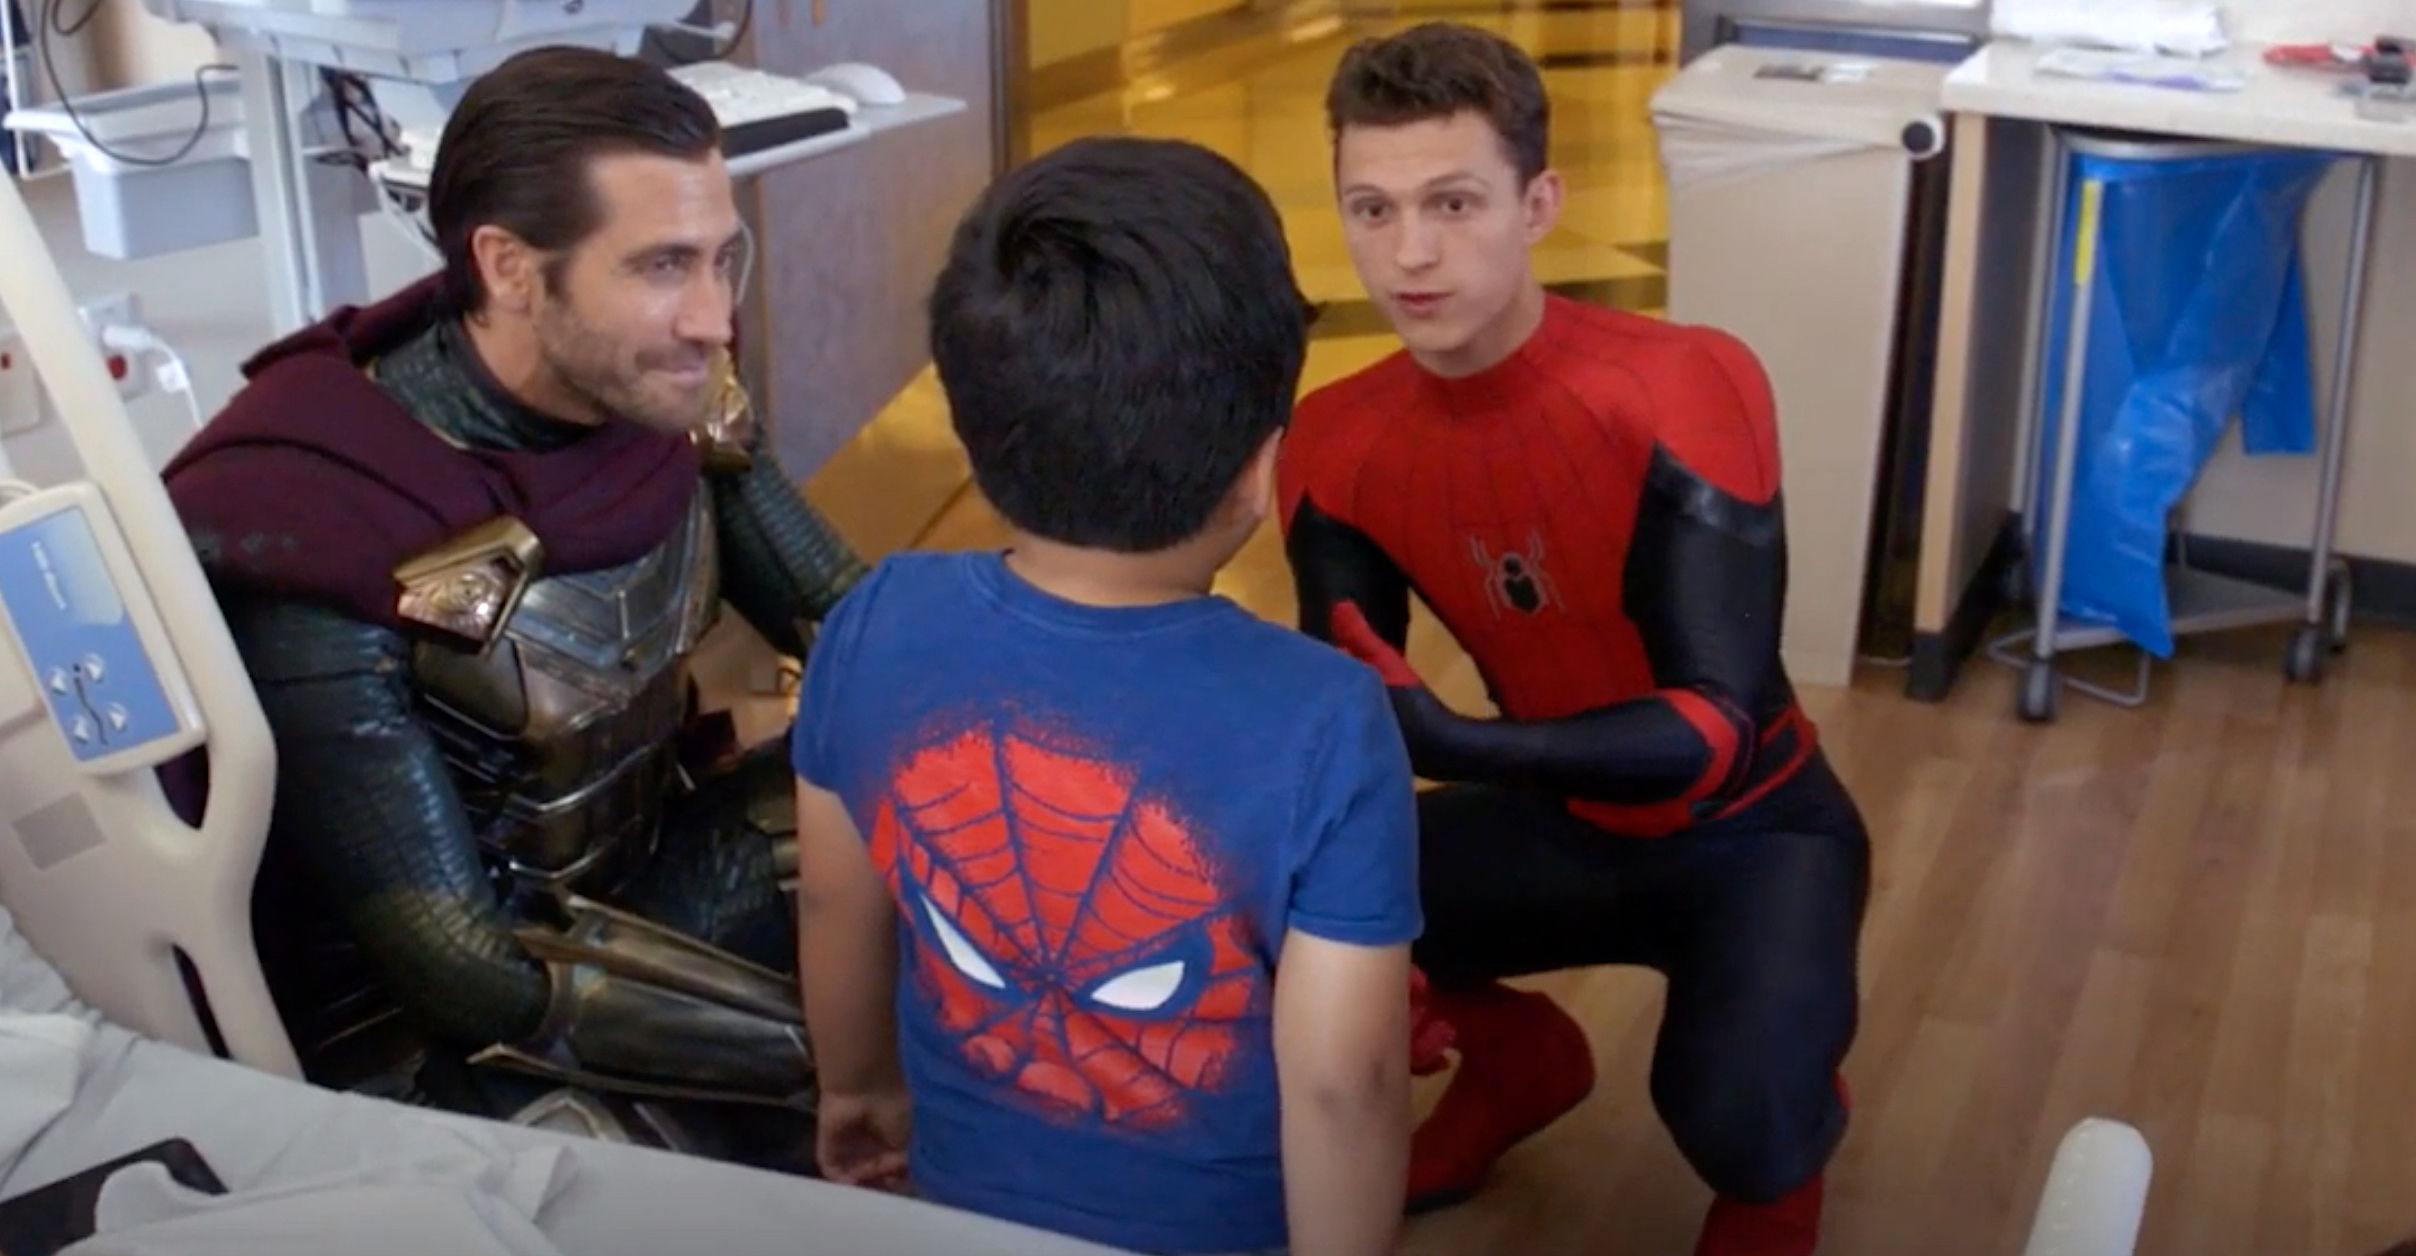 Spider Man cast visits Childrens Hospital patients